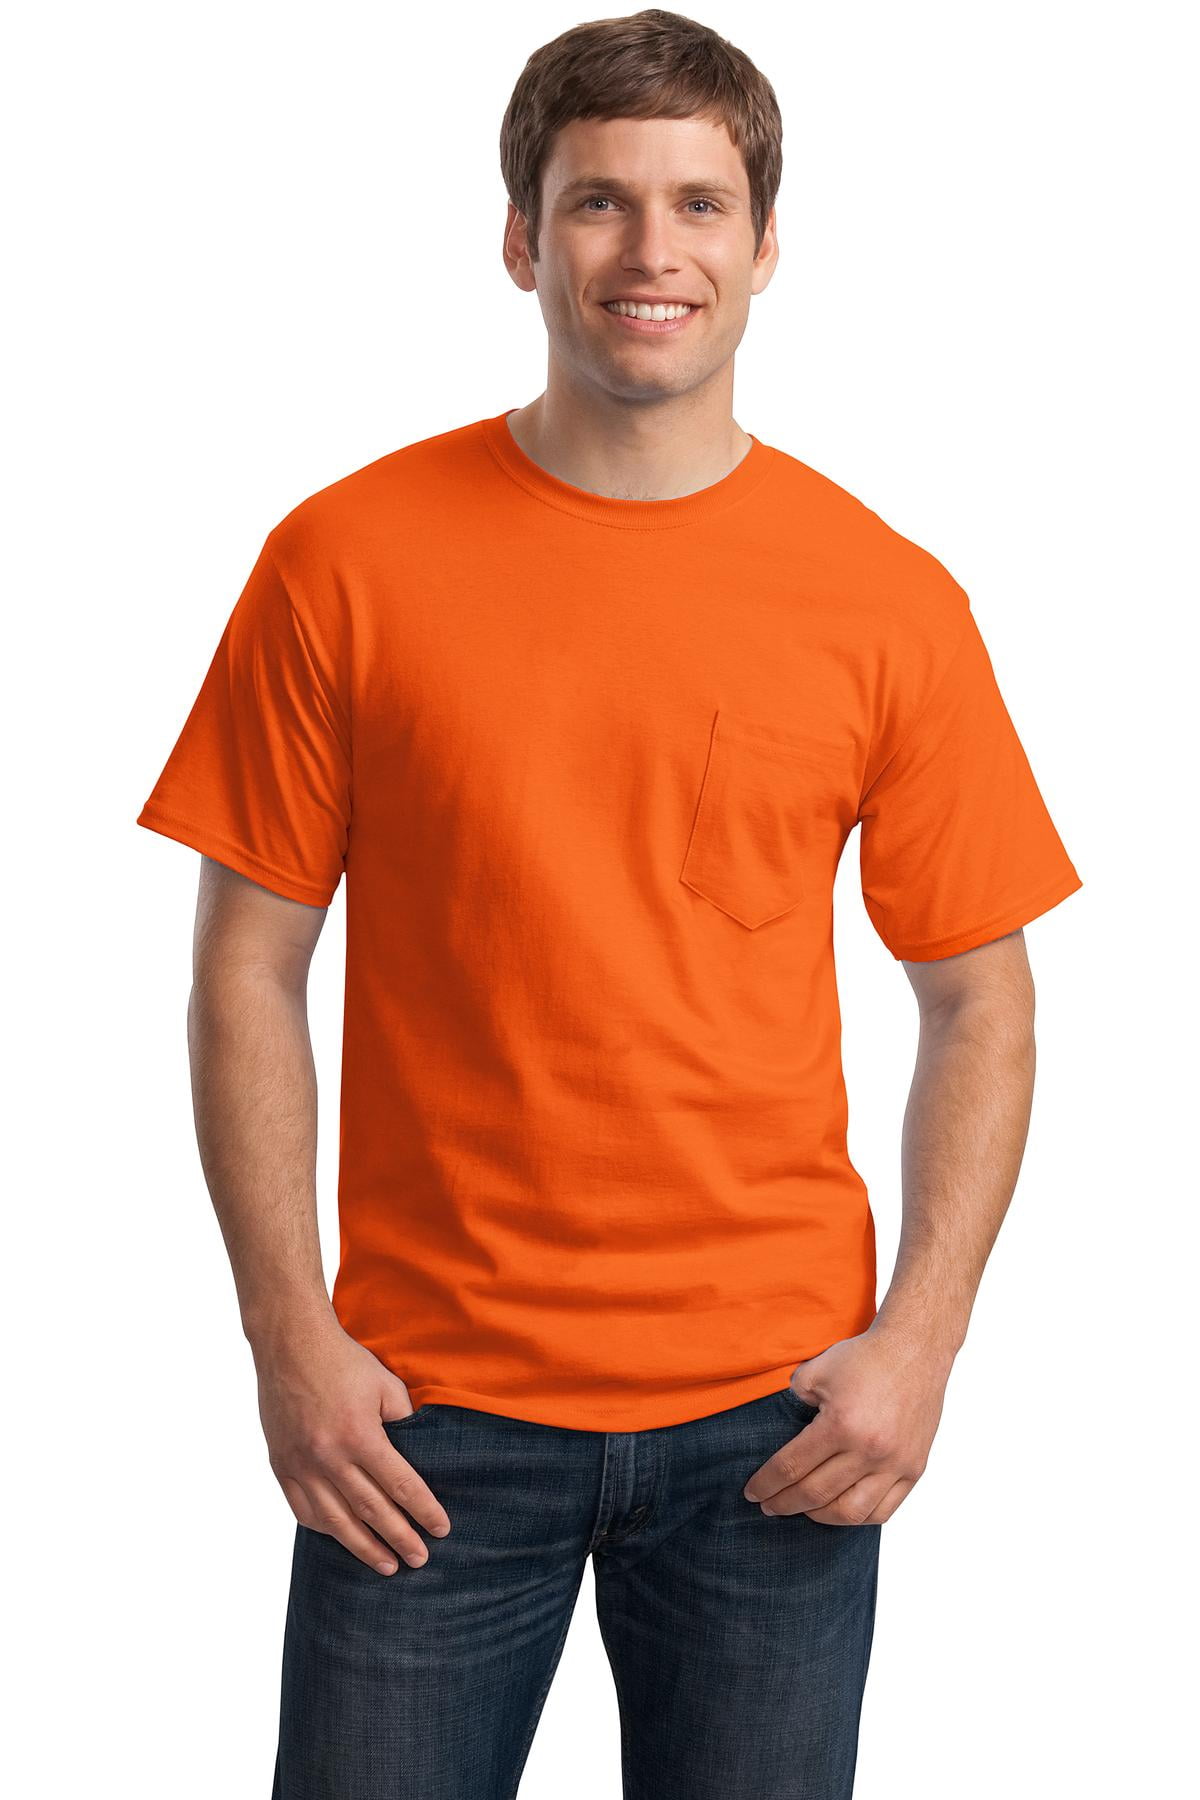 Hanes Men's Short Sleeve Tagless 100% Cotton T-Shirt with Pocket 5590 ...